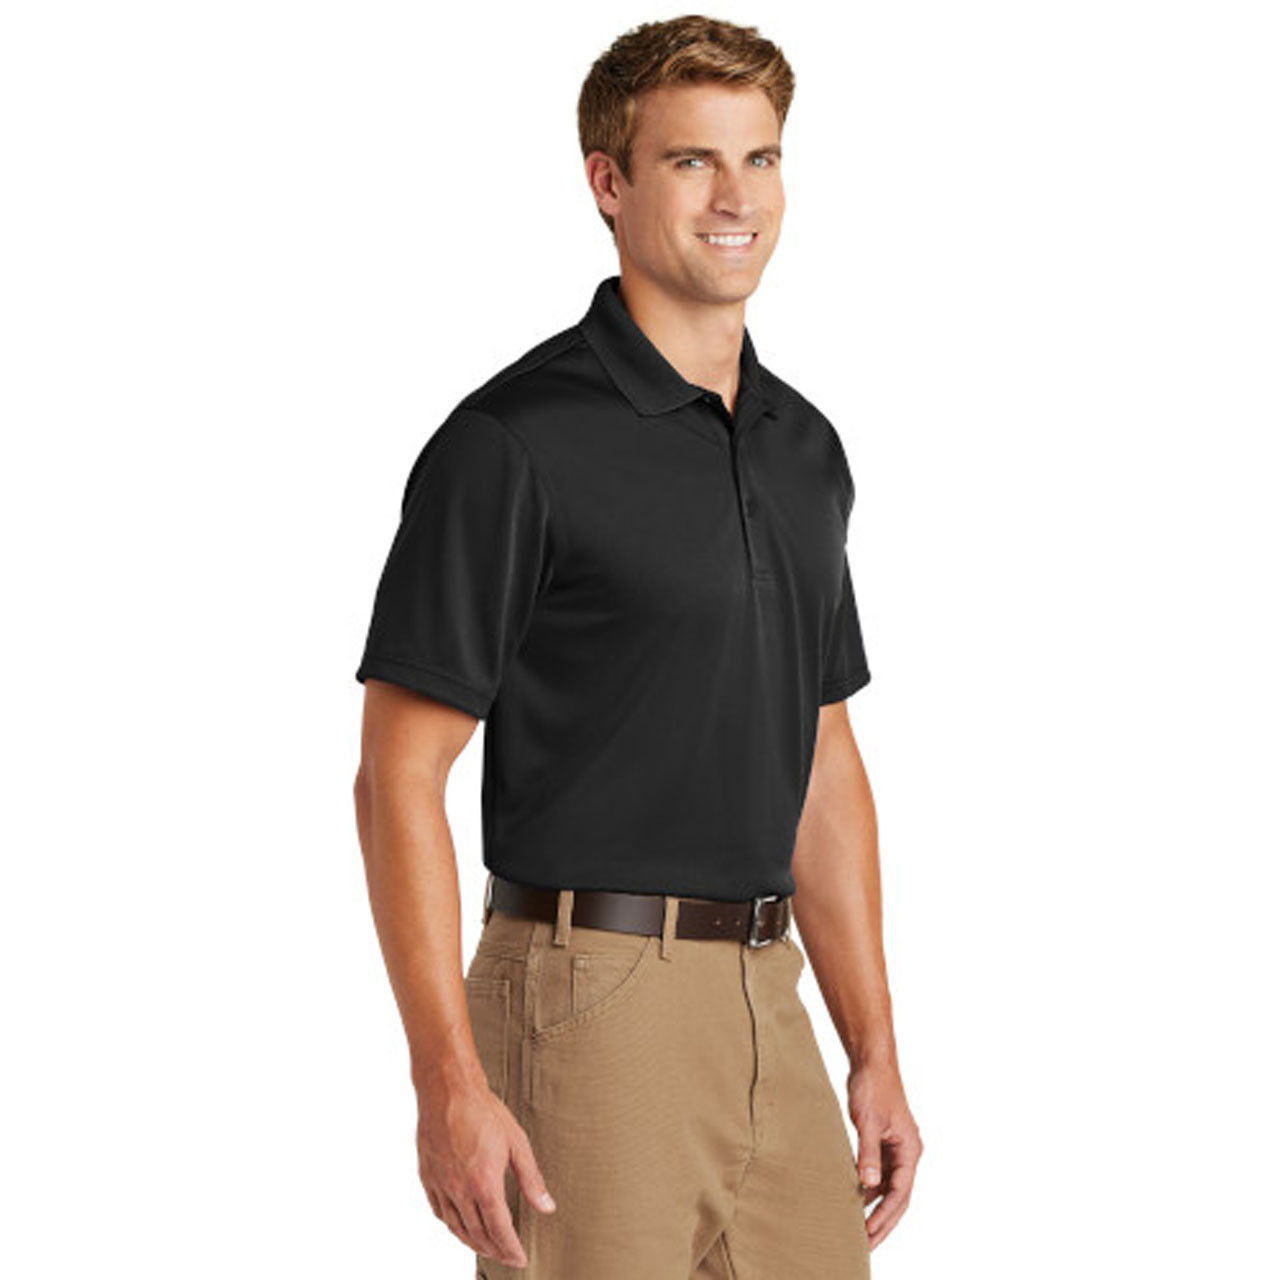 Can I buy the men's black polo shirt in bulk?